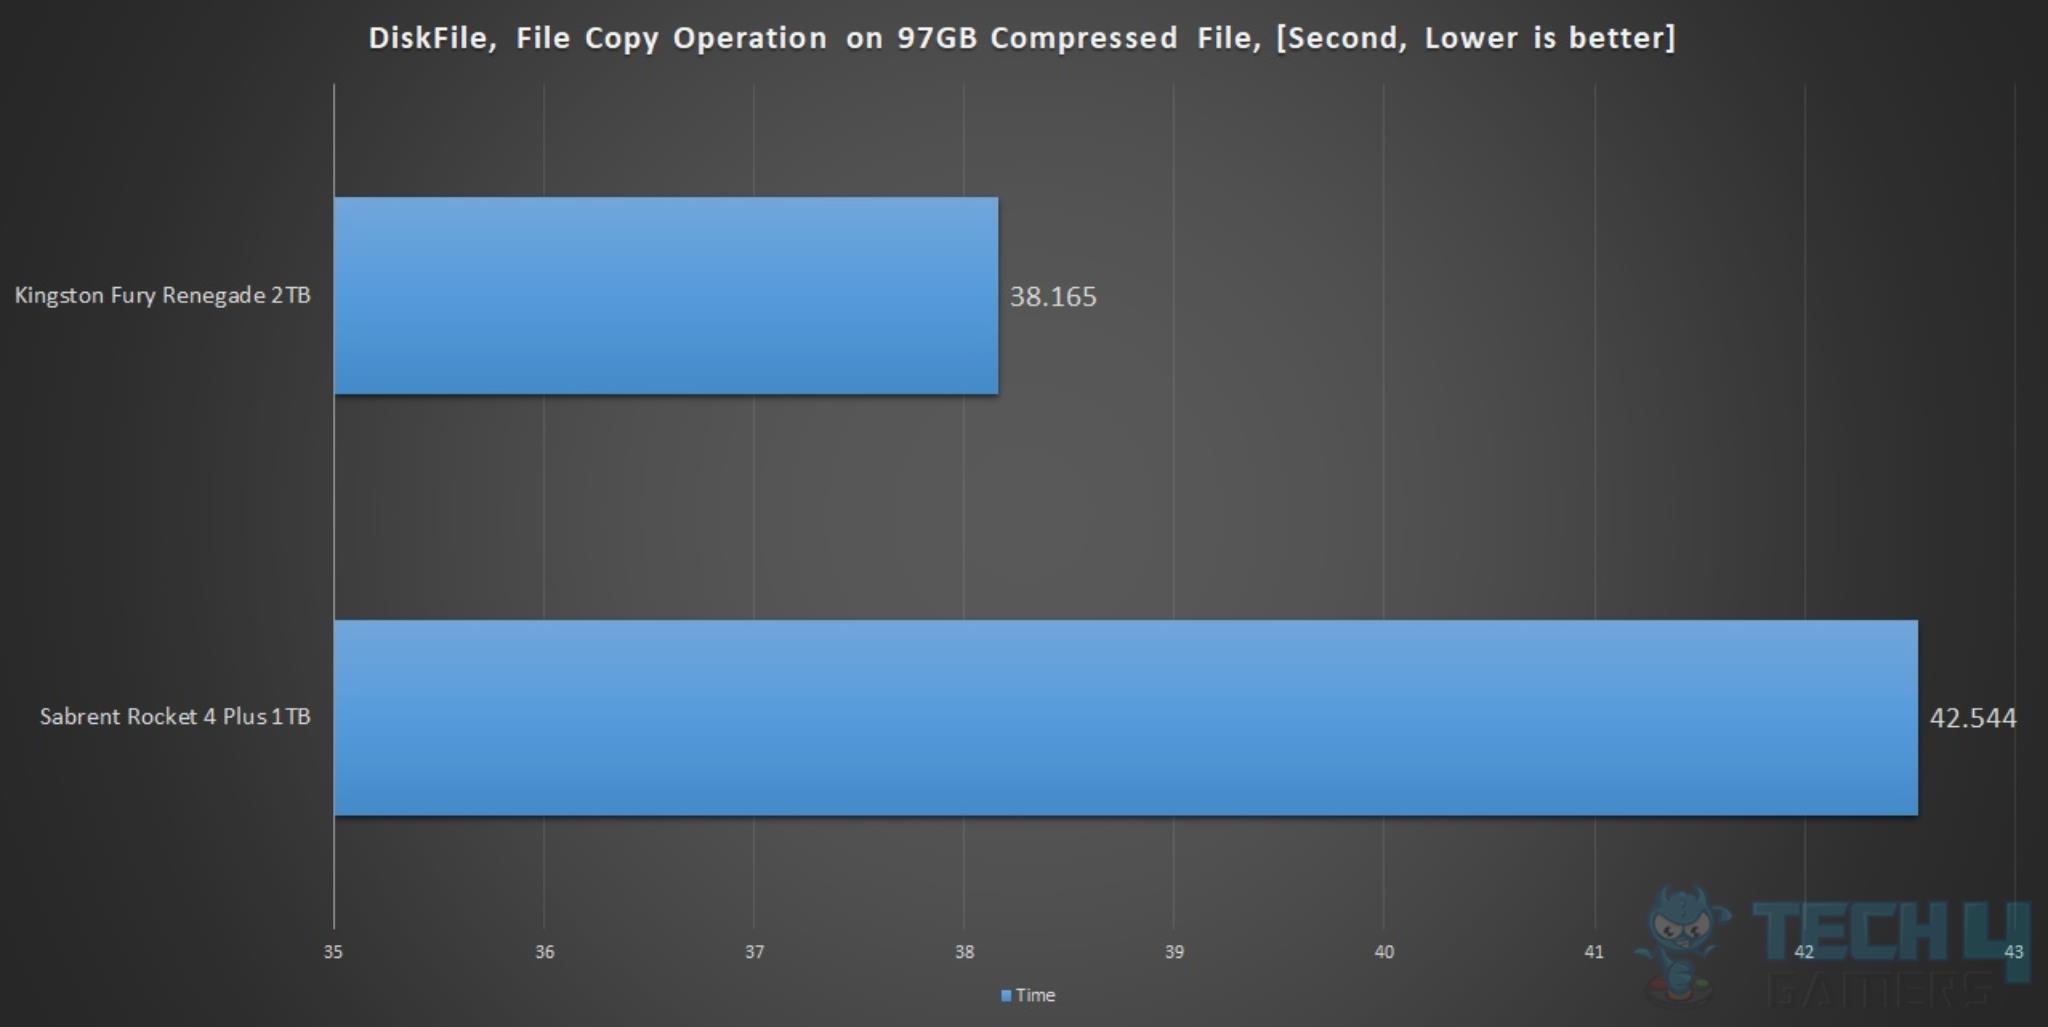 Kingston Fury Renegade 2TB NVMe SSD — DiskFile Copy Operation Time